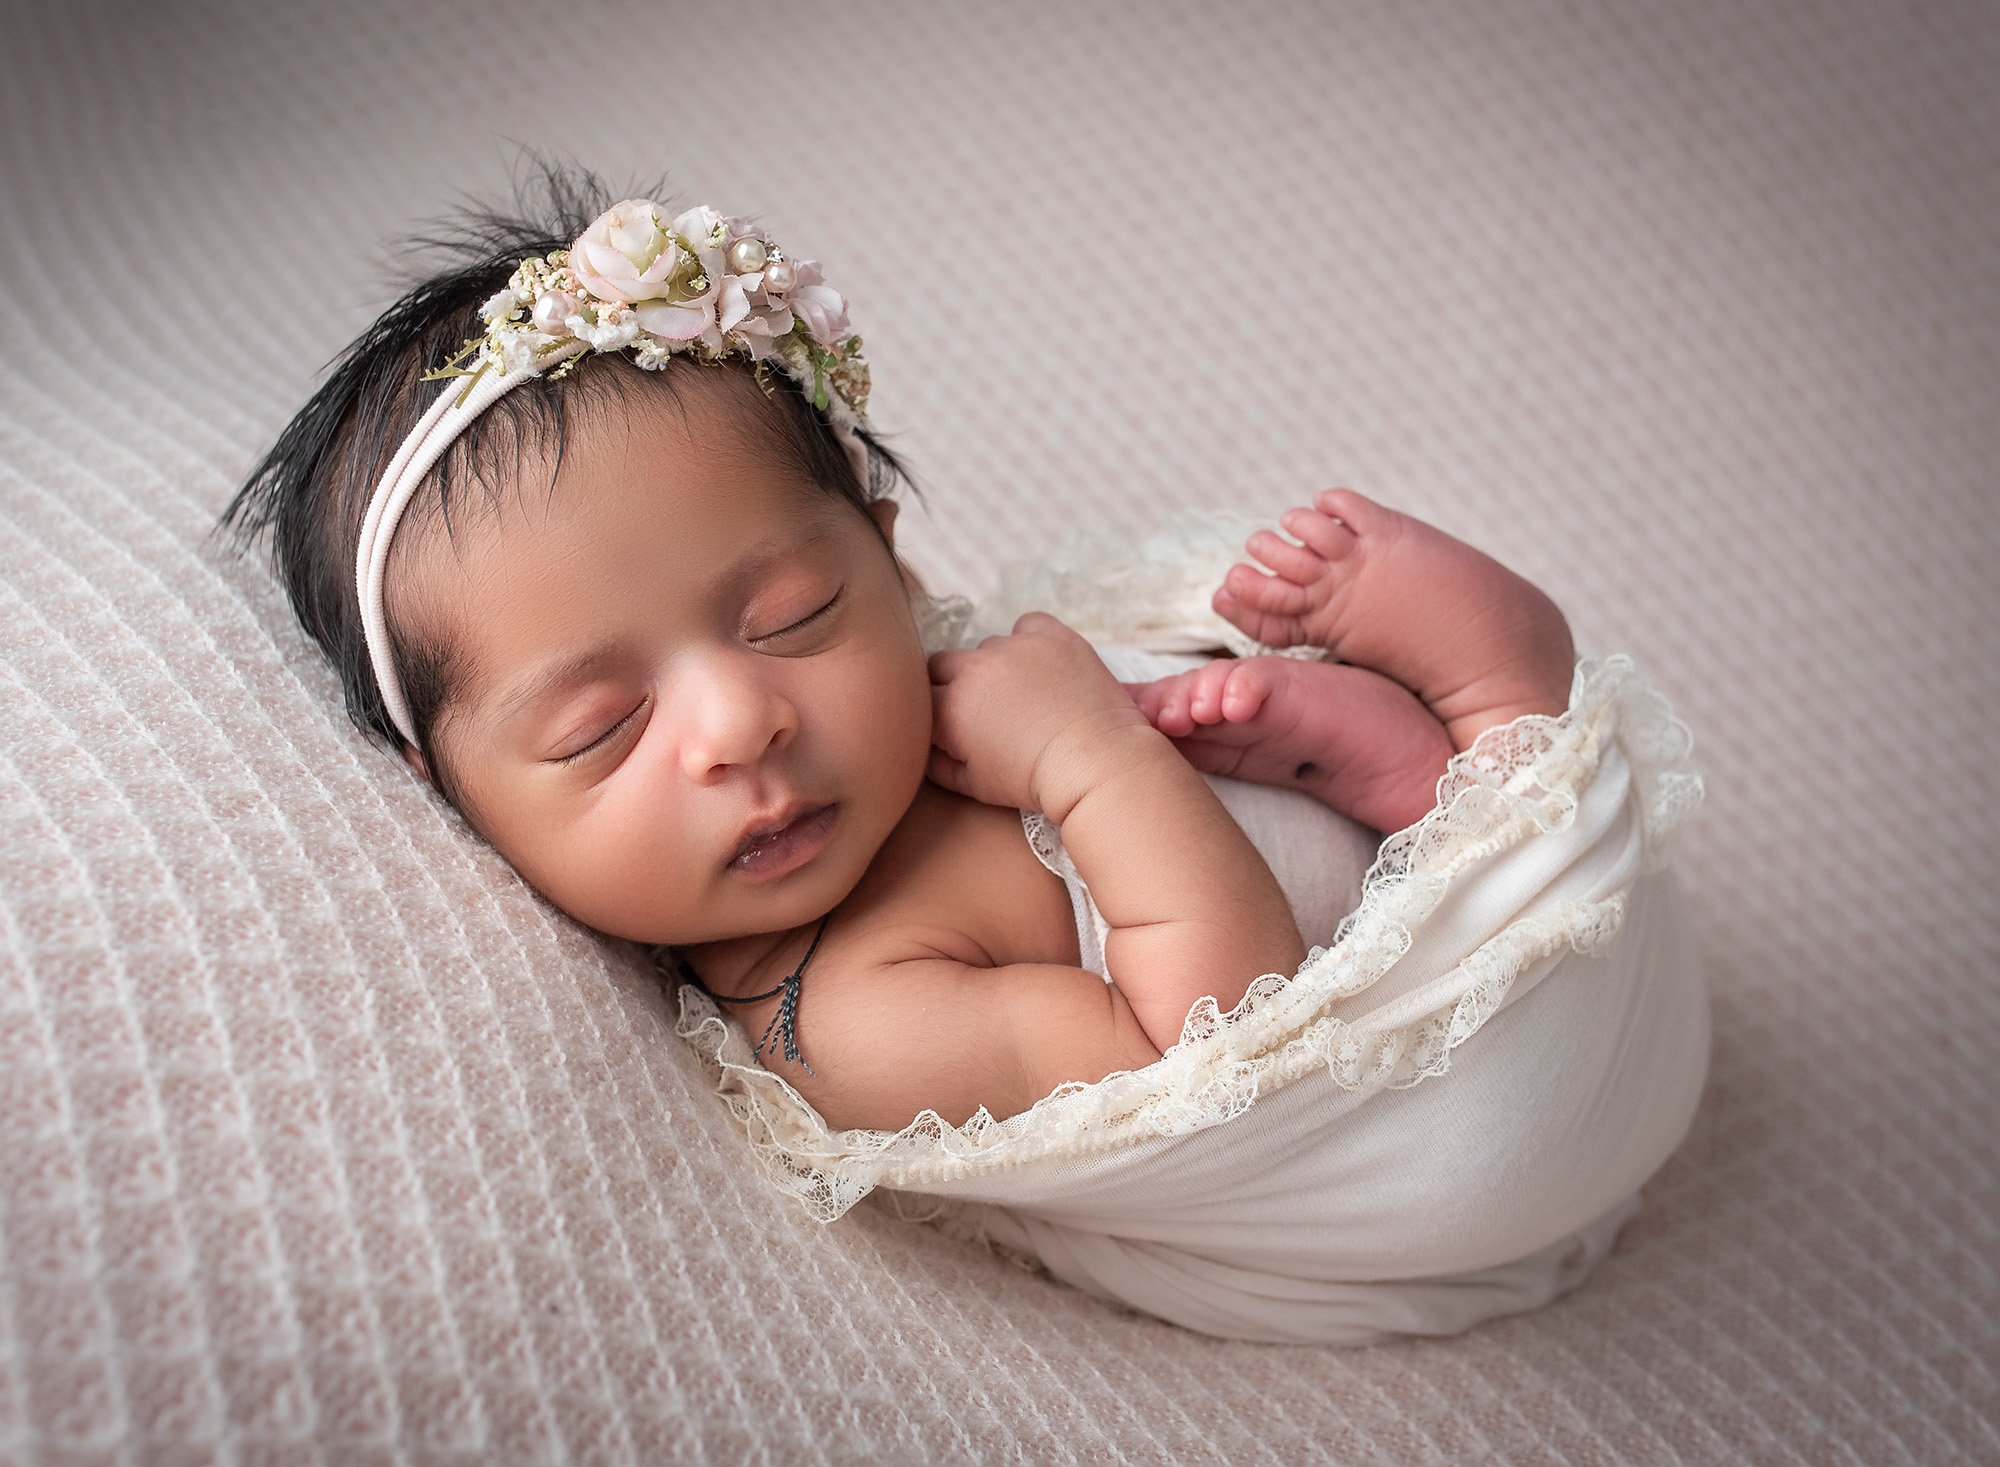 brunette newborn baby girl swaddled in lace